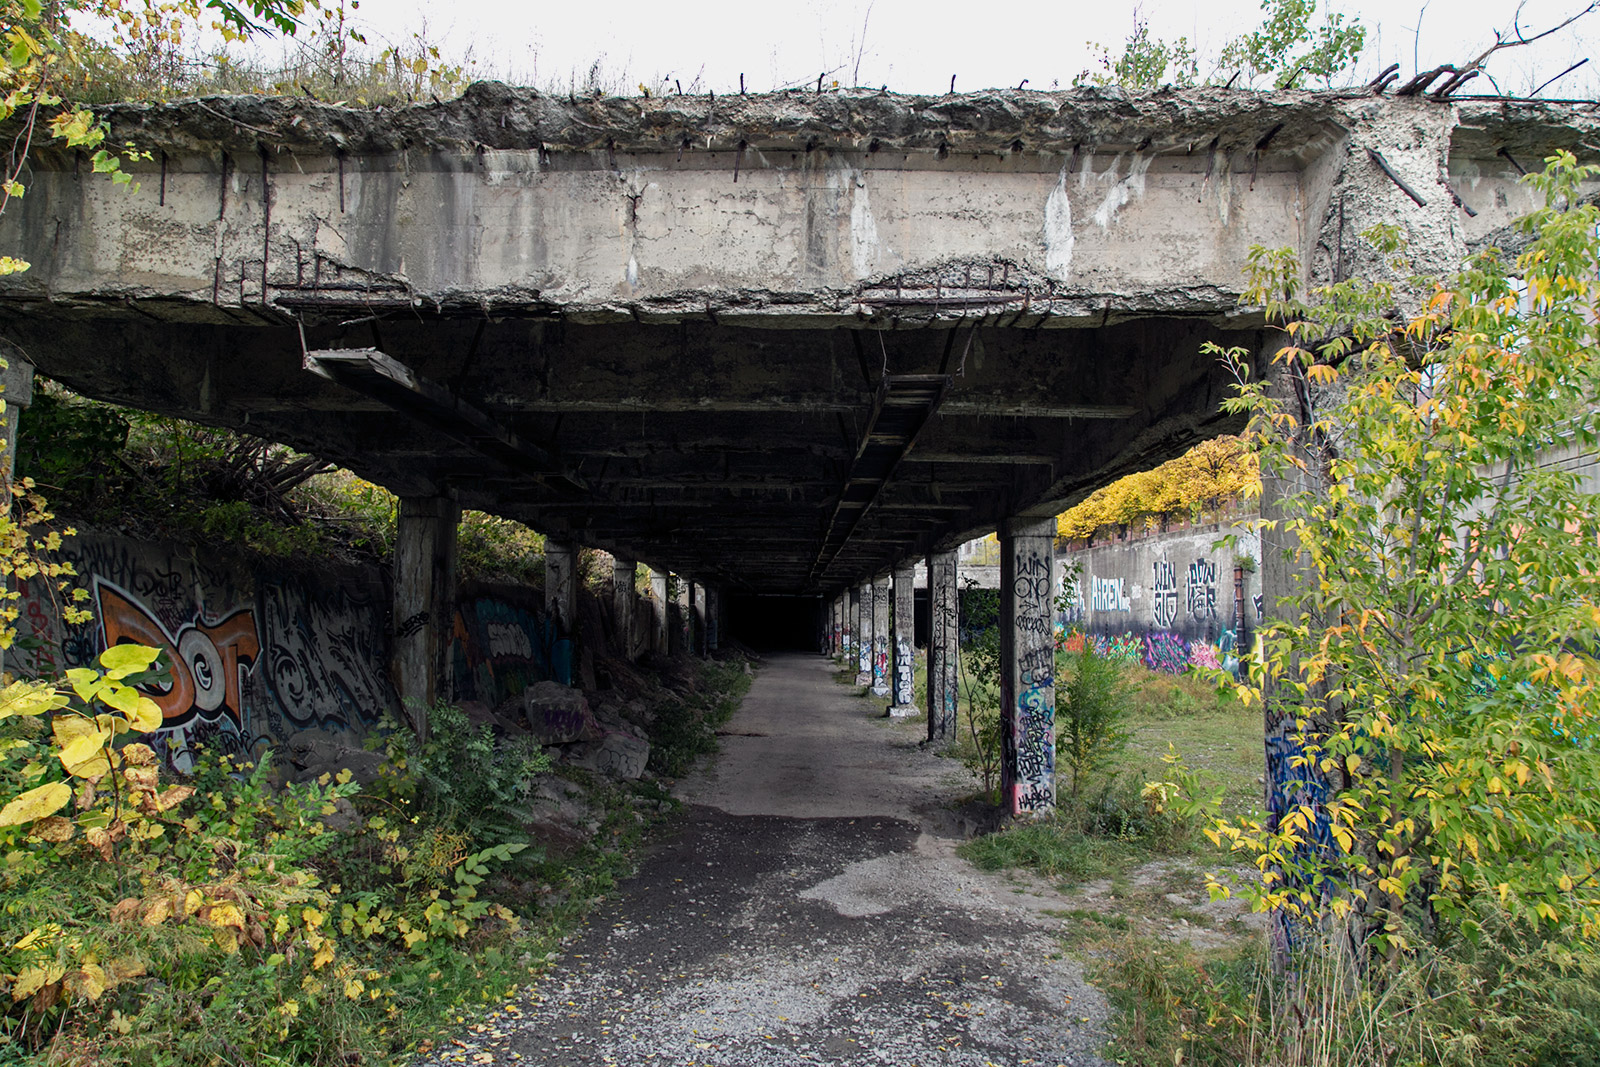 20141031. Entering Rochester's abandoned underground subway (clo